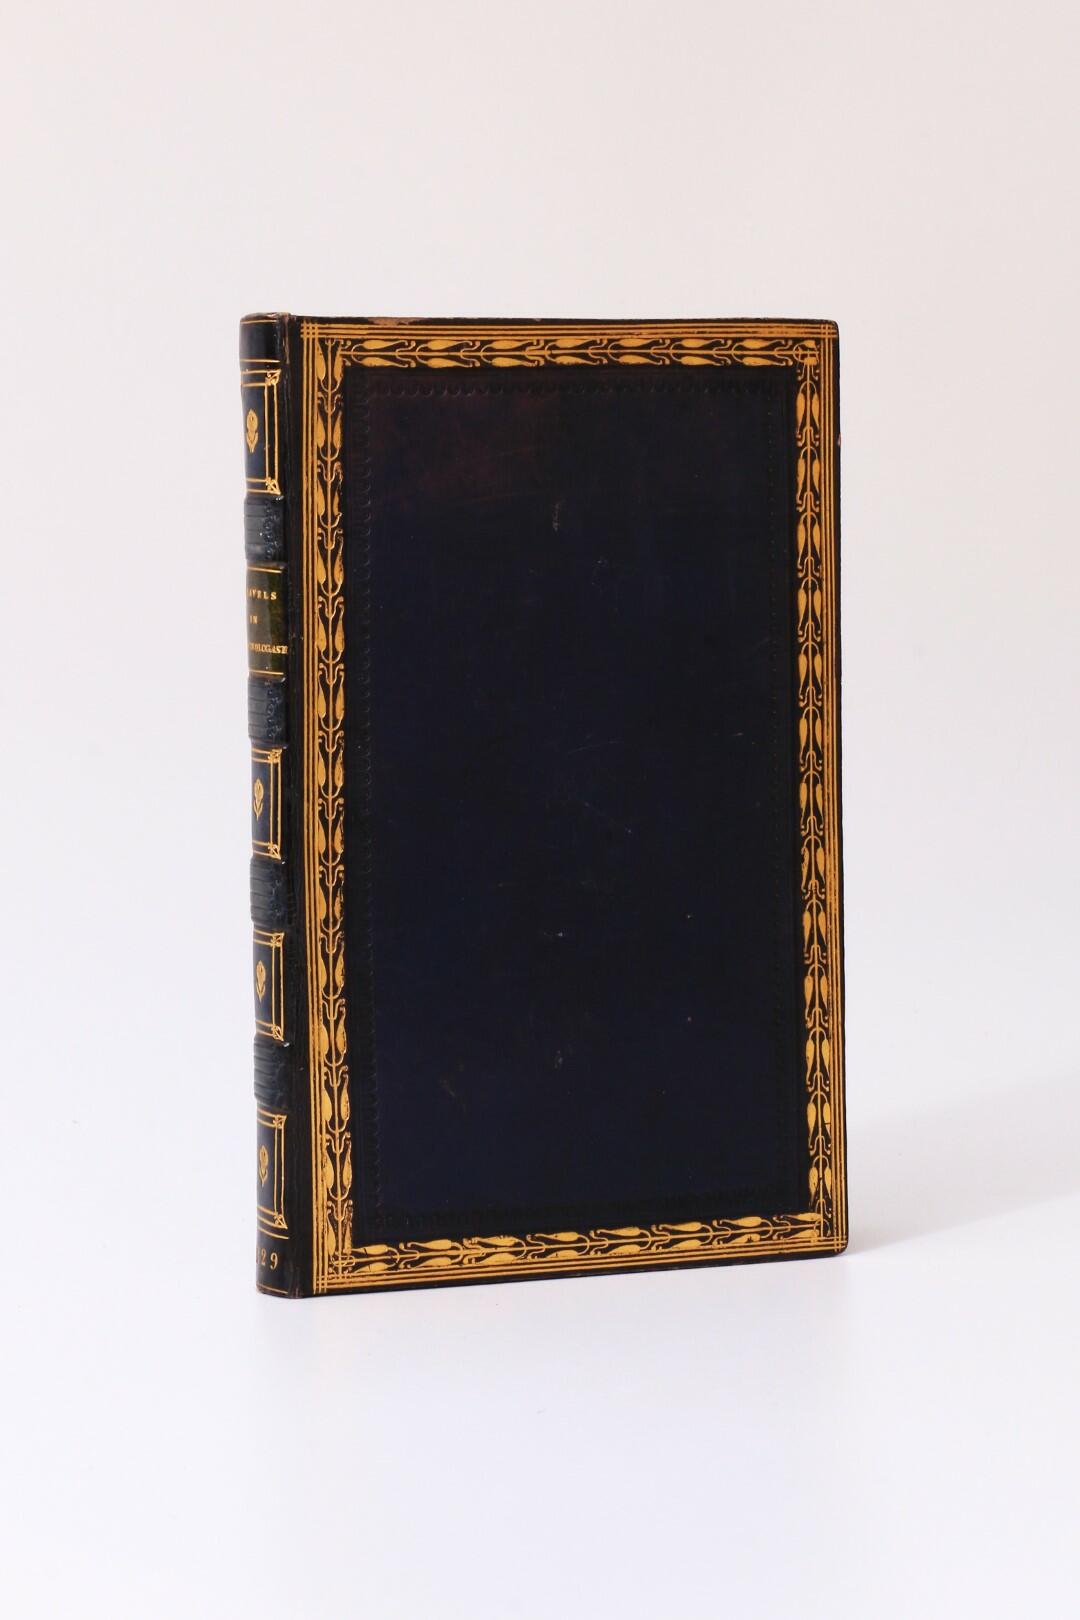 Gio. Battista Balscopo [John Trotter] - Travels in Phrenologasto - Saunders and Otley, 1829, First Edition.